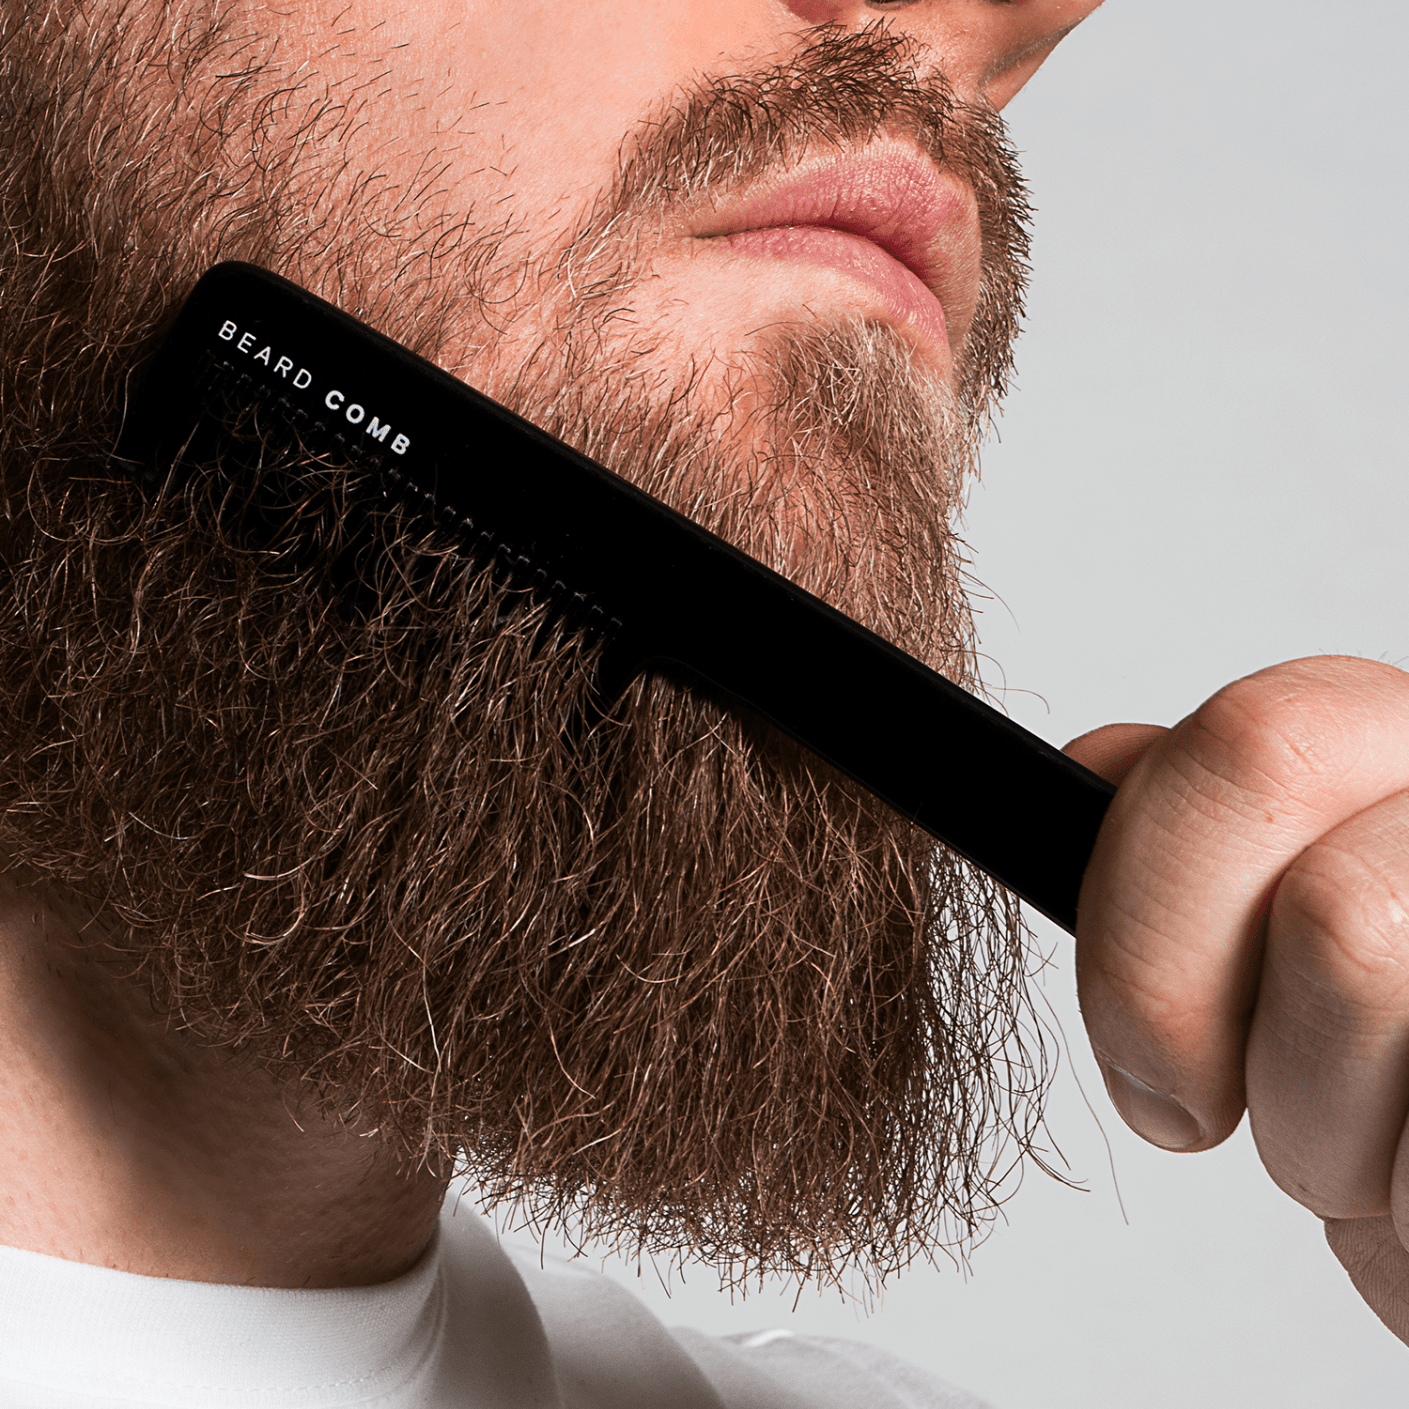 The Beard Comb